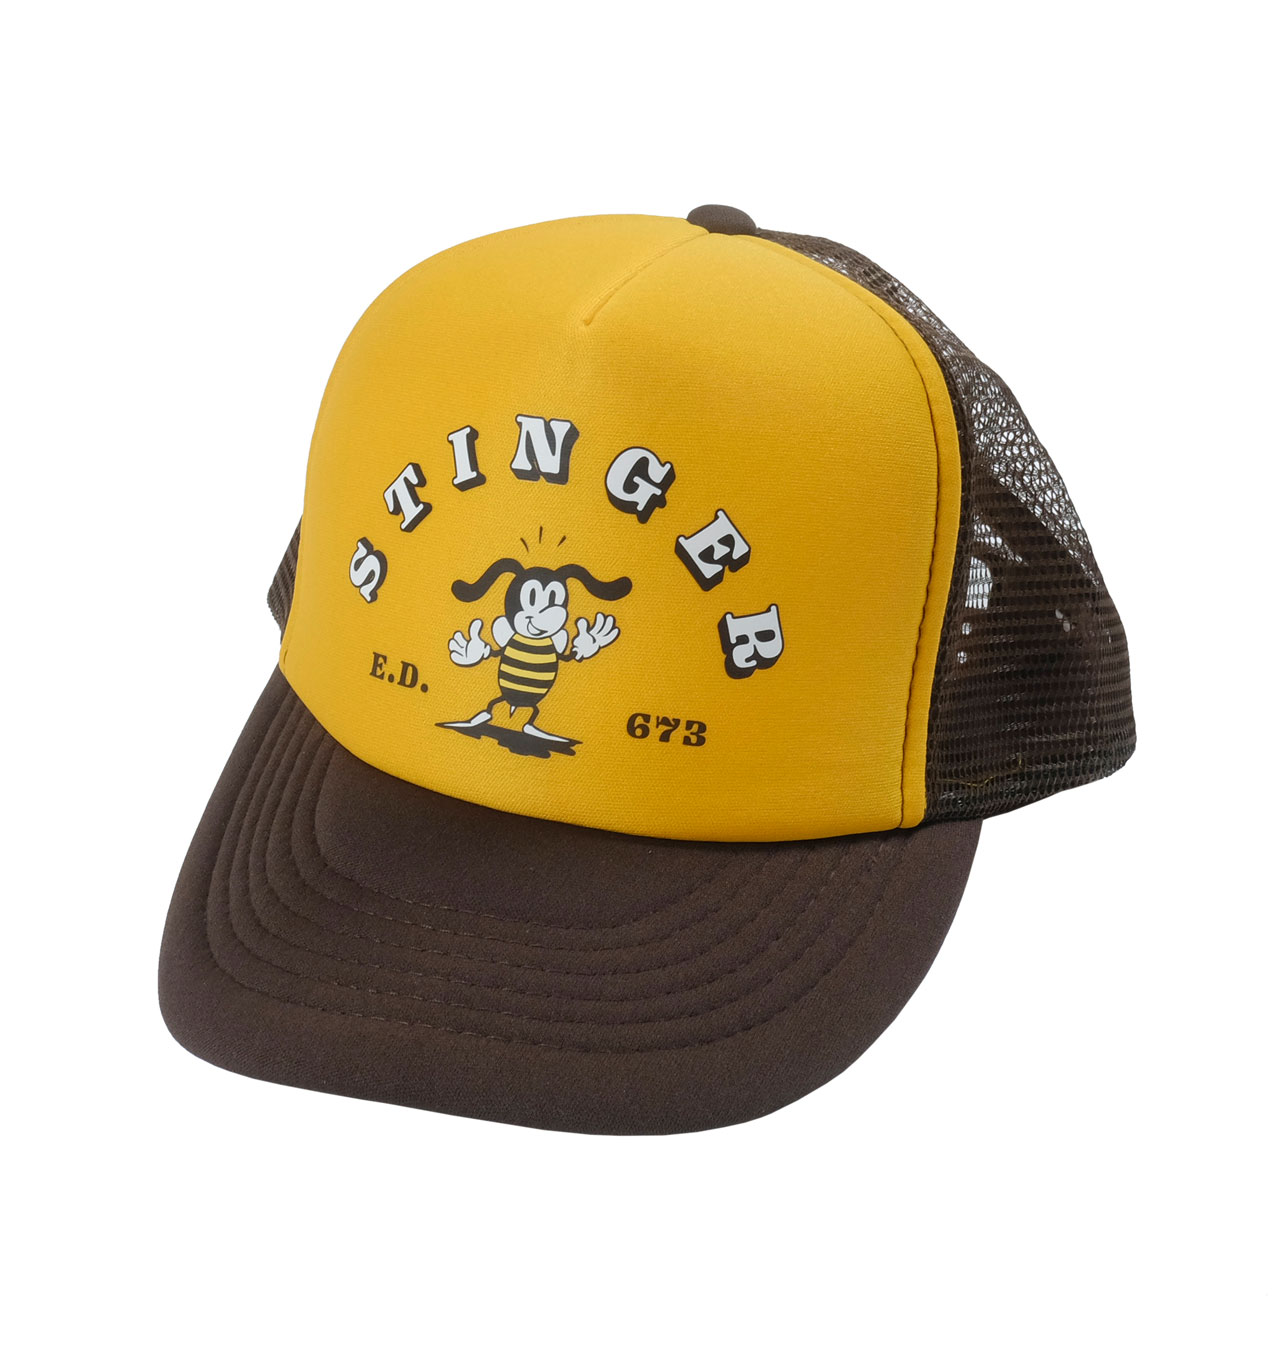 Eat Dust - Stinger Trucker Cap - Brown/Yellow